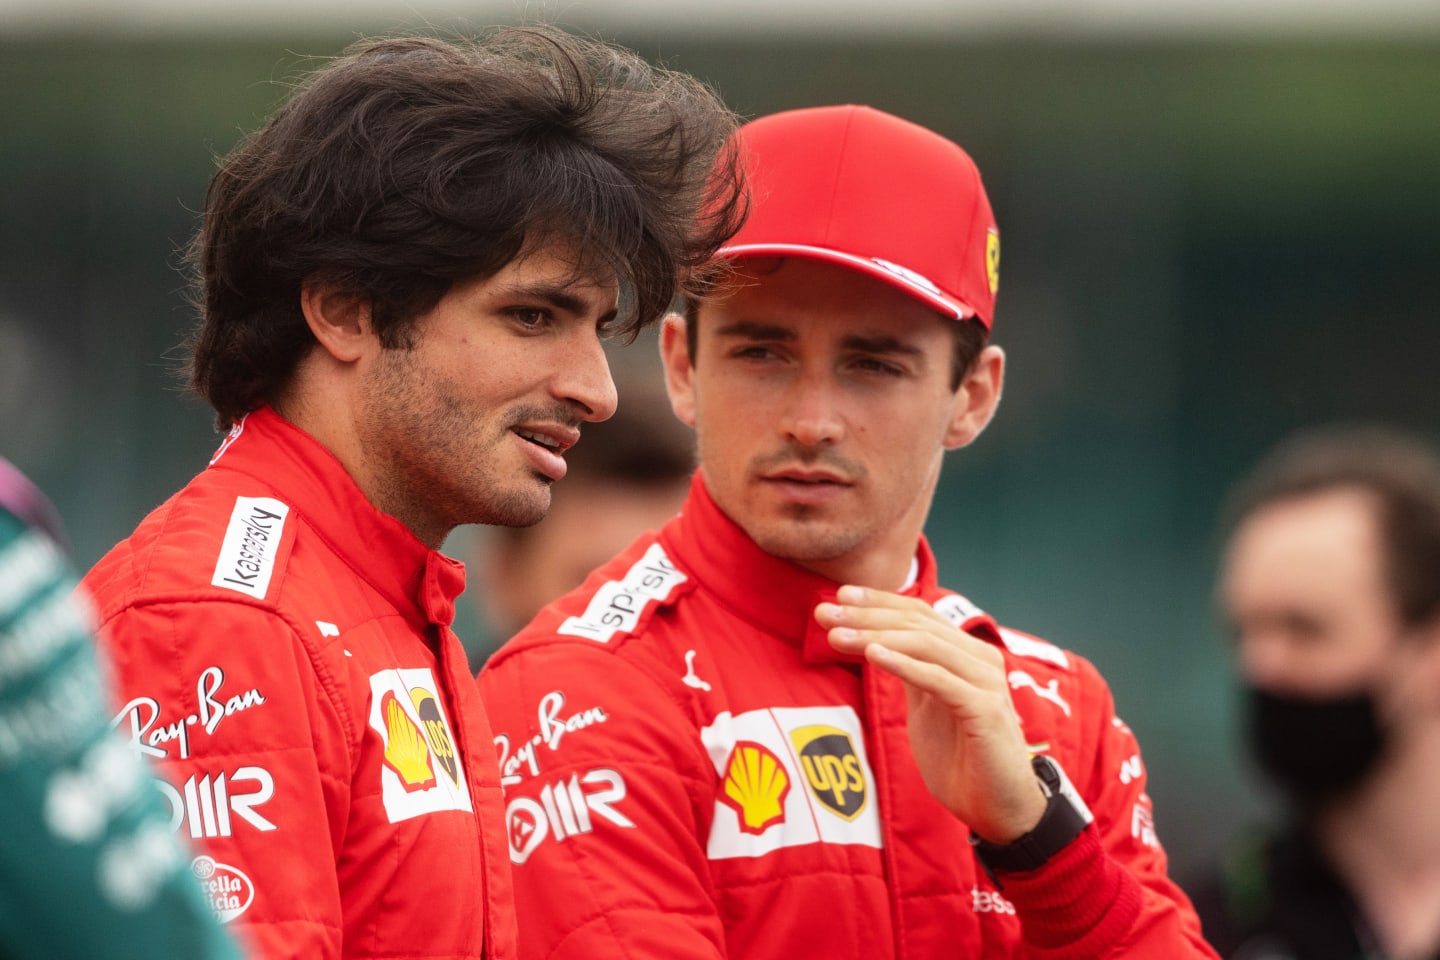 NORTHAMPTON, ENGLAND - JULY 15: Carlos Sainz of Spain and Ferrari and Charles Leclerc of Monaco and